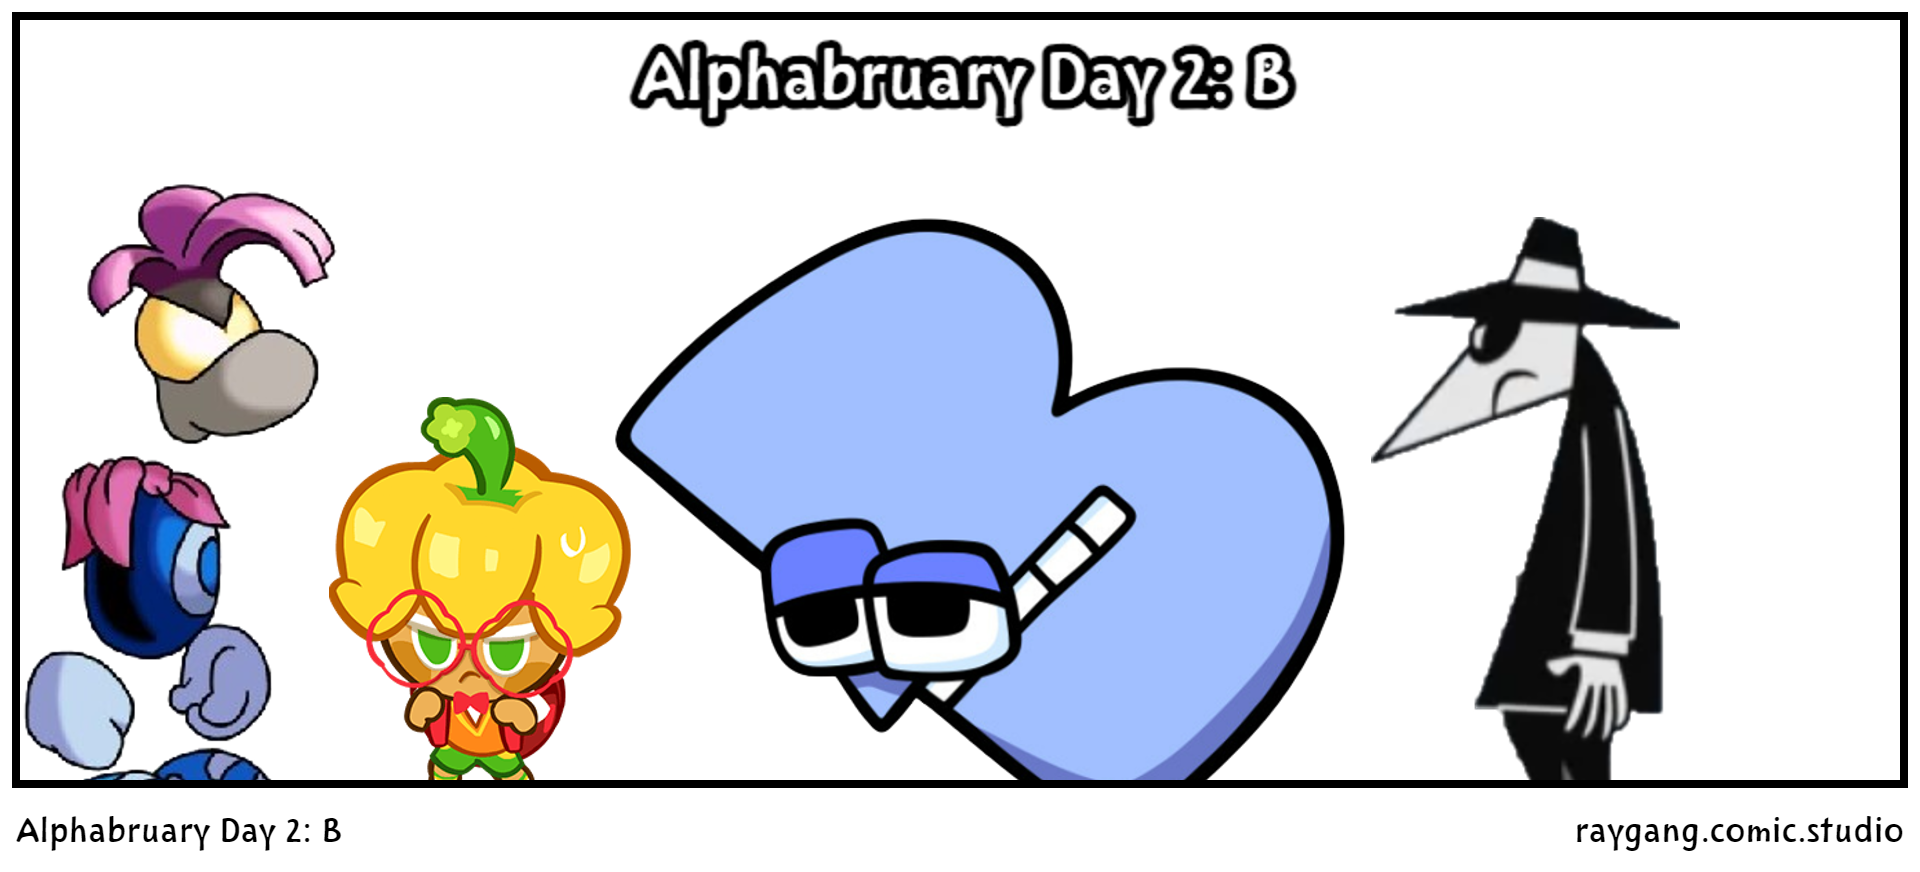 Alphabruary Day 2: B